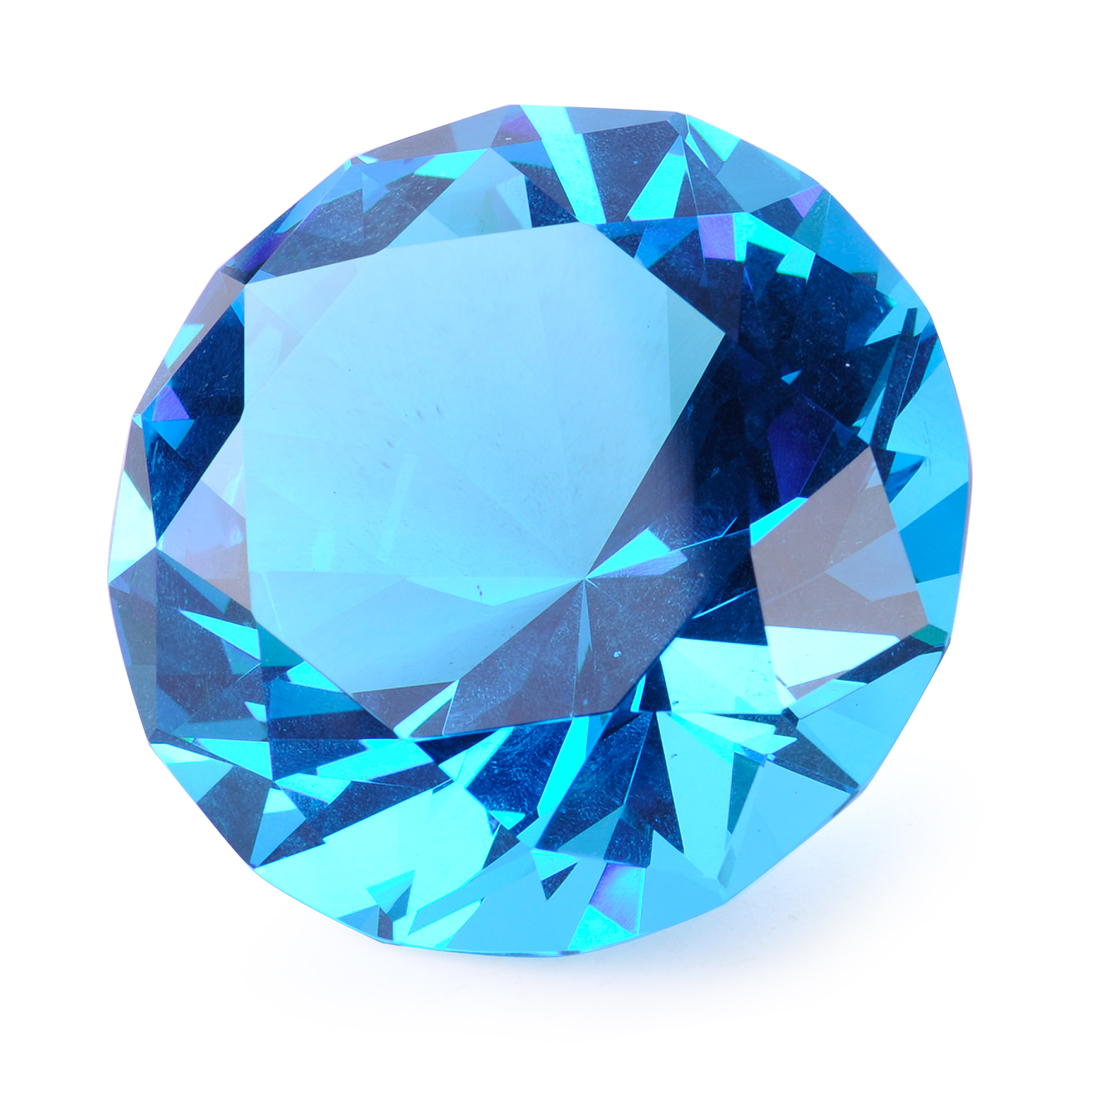 Blau Kristall Glas Diamant Kristallglas Glasdiamant Hochzeit Feng Shui Deko 